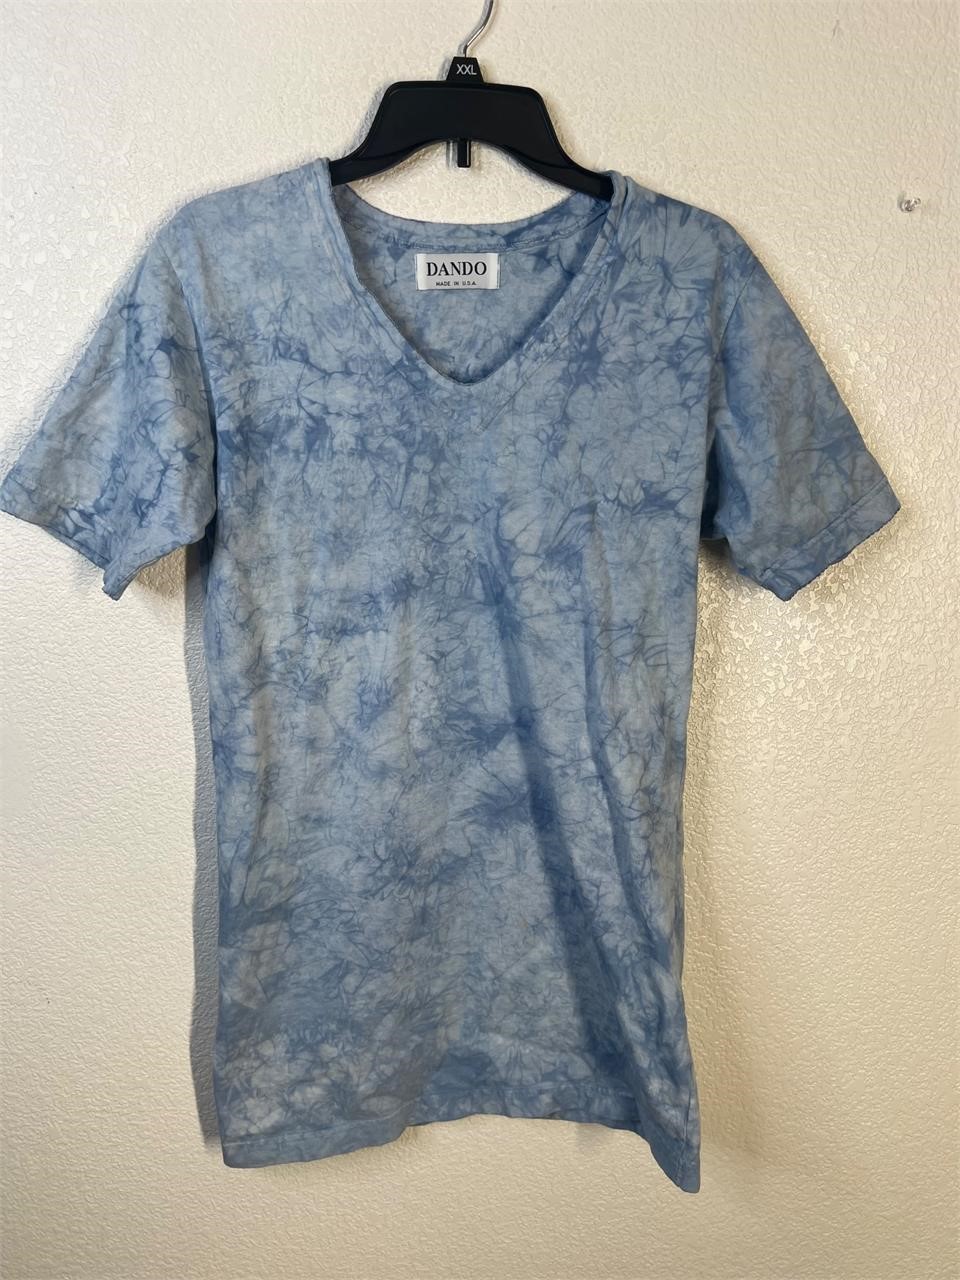 Vintage 80s/90s Tie Dye Blue Shirt